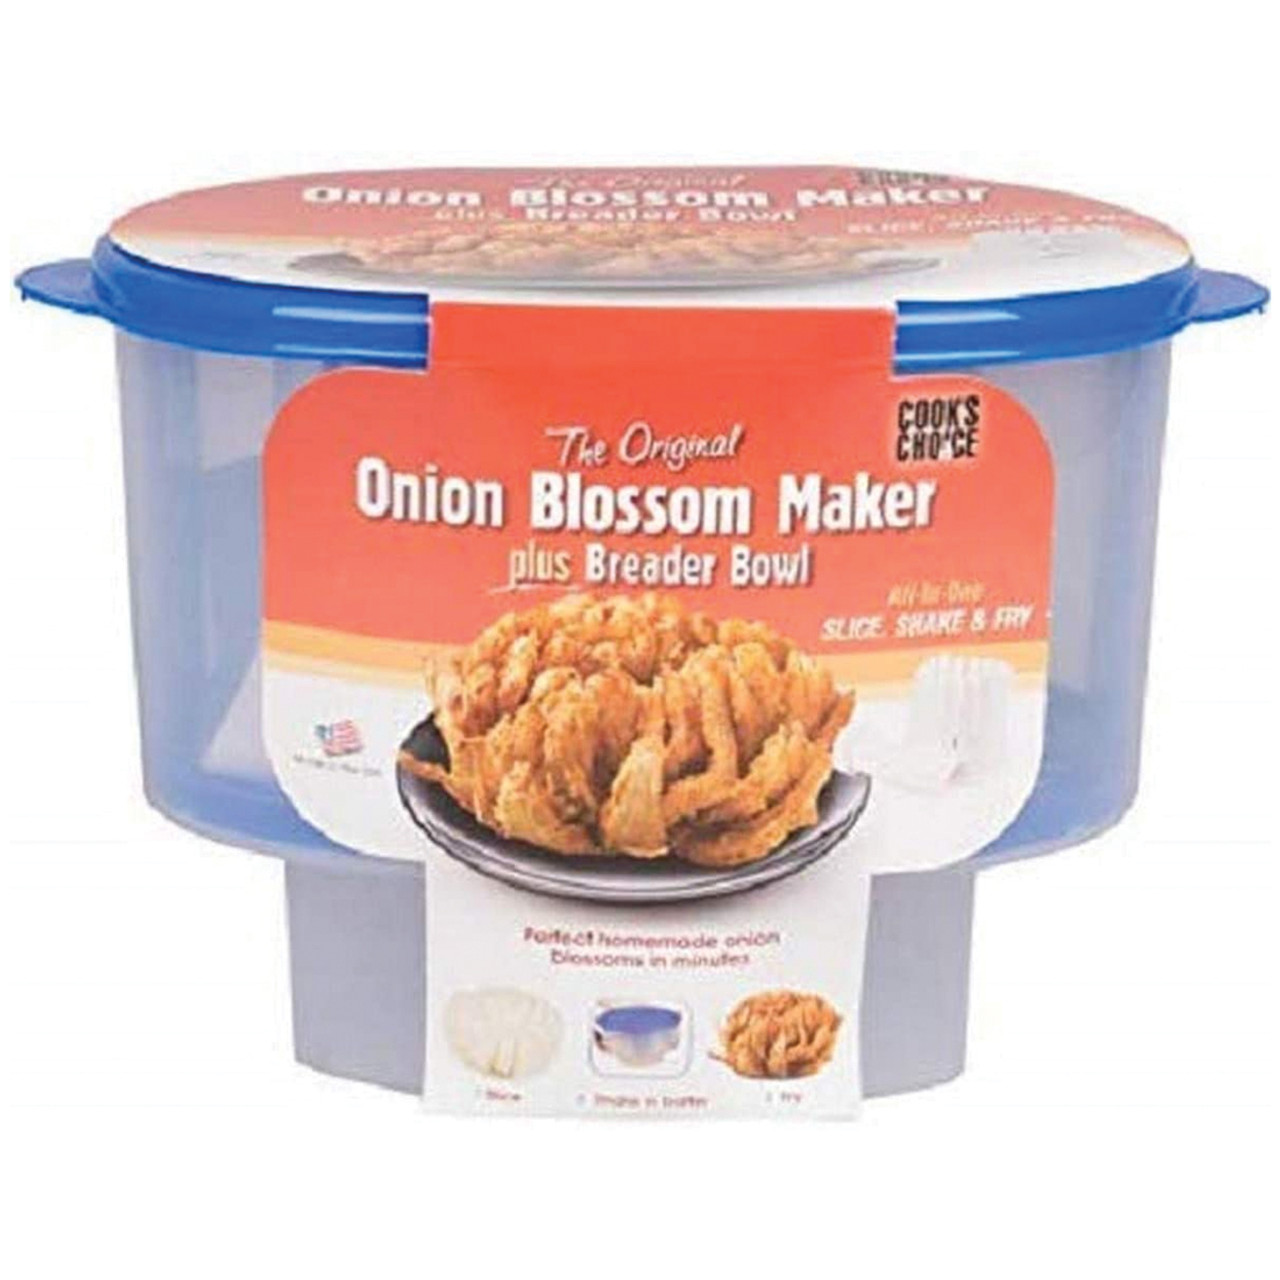 Cook's Choice Original Breader Bowl with Onion Blossom Maker